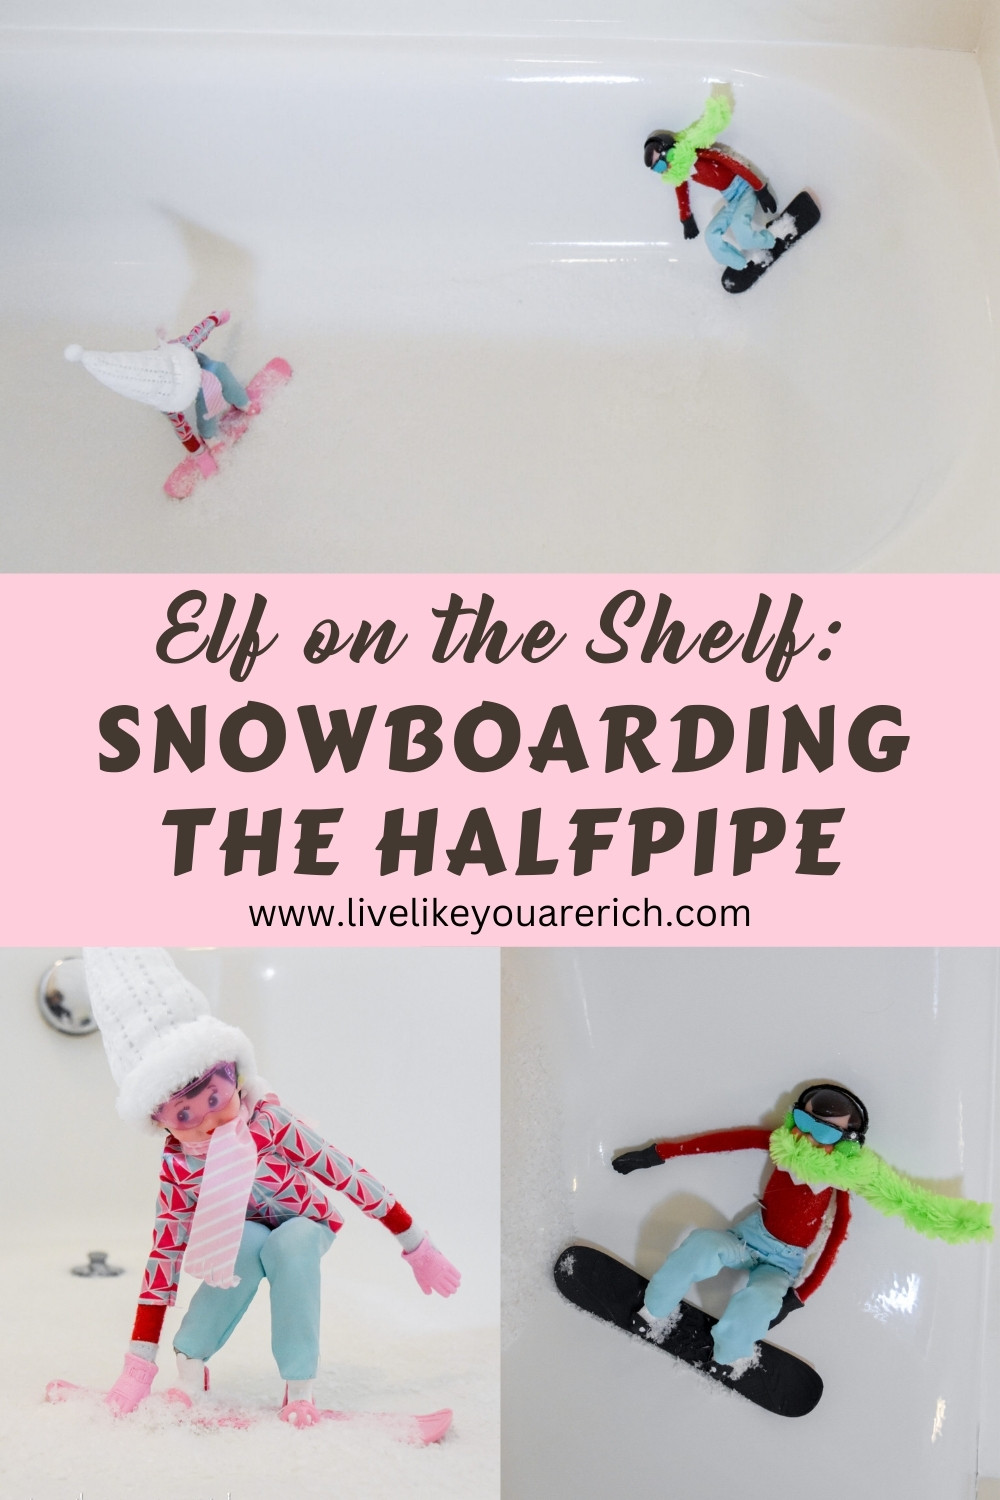 Elf on the Shelf: Snowboarding the Halfpipe